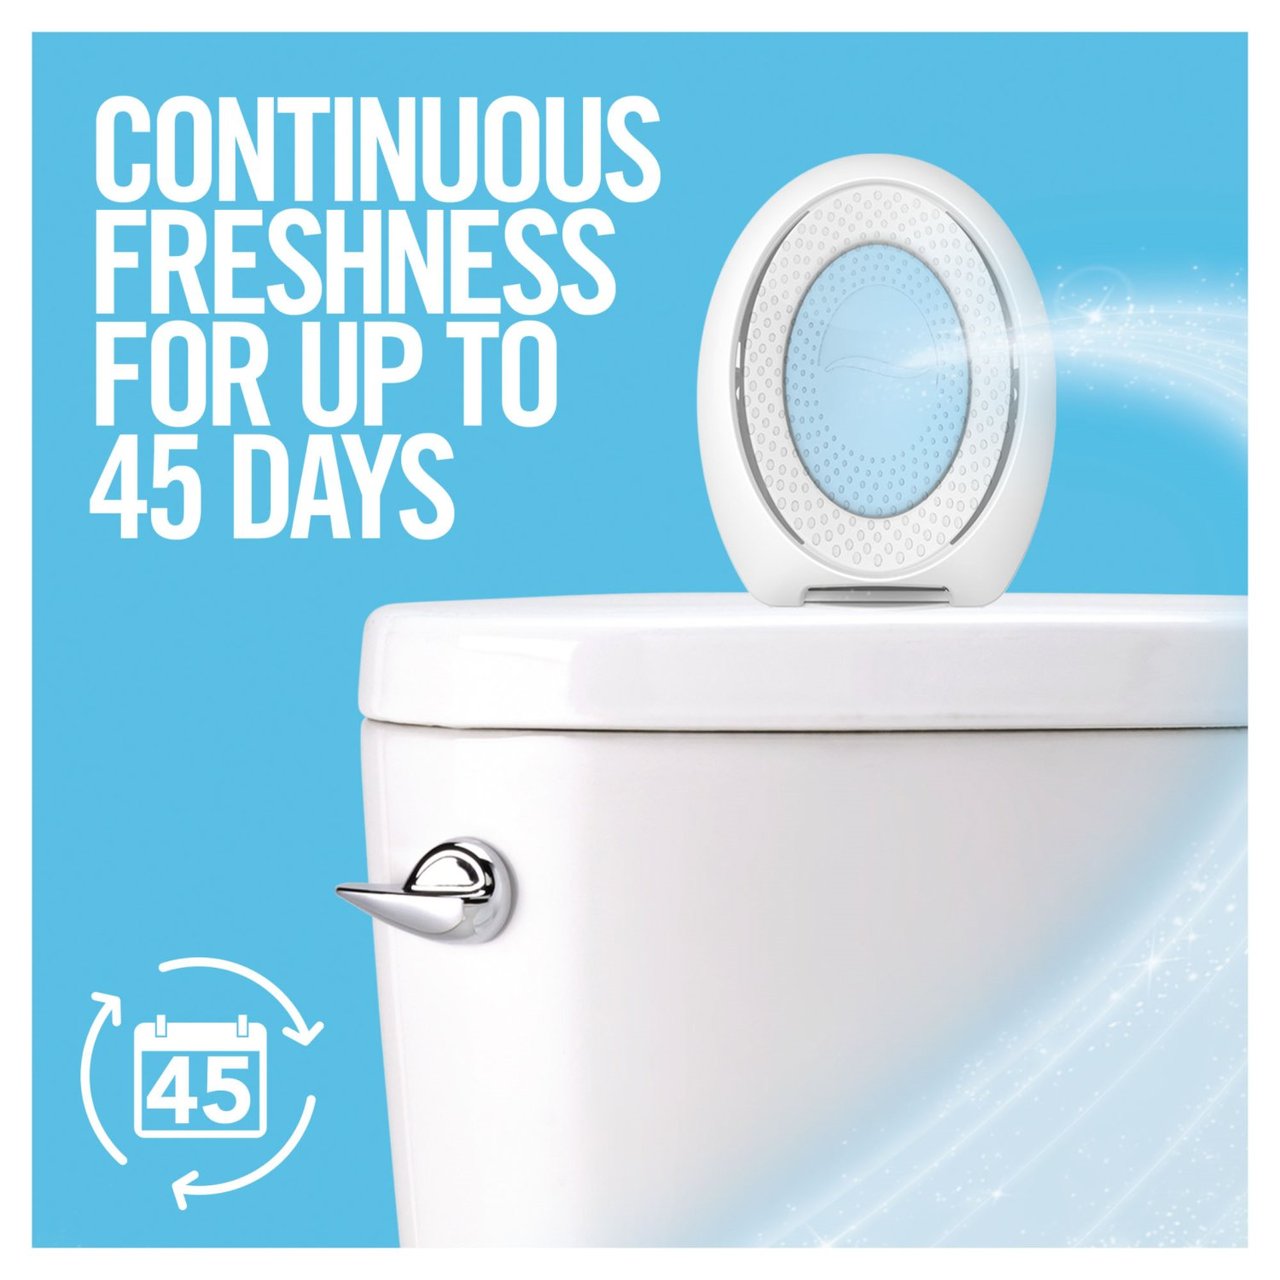 Febreze Bathroom Air Freshener Spiced Apple 7ml